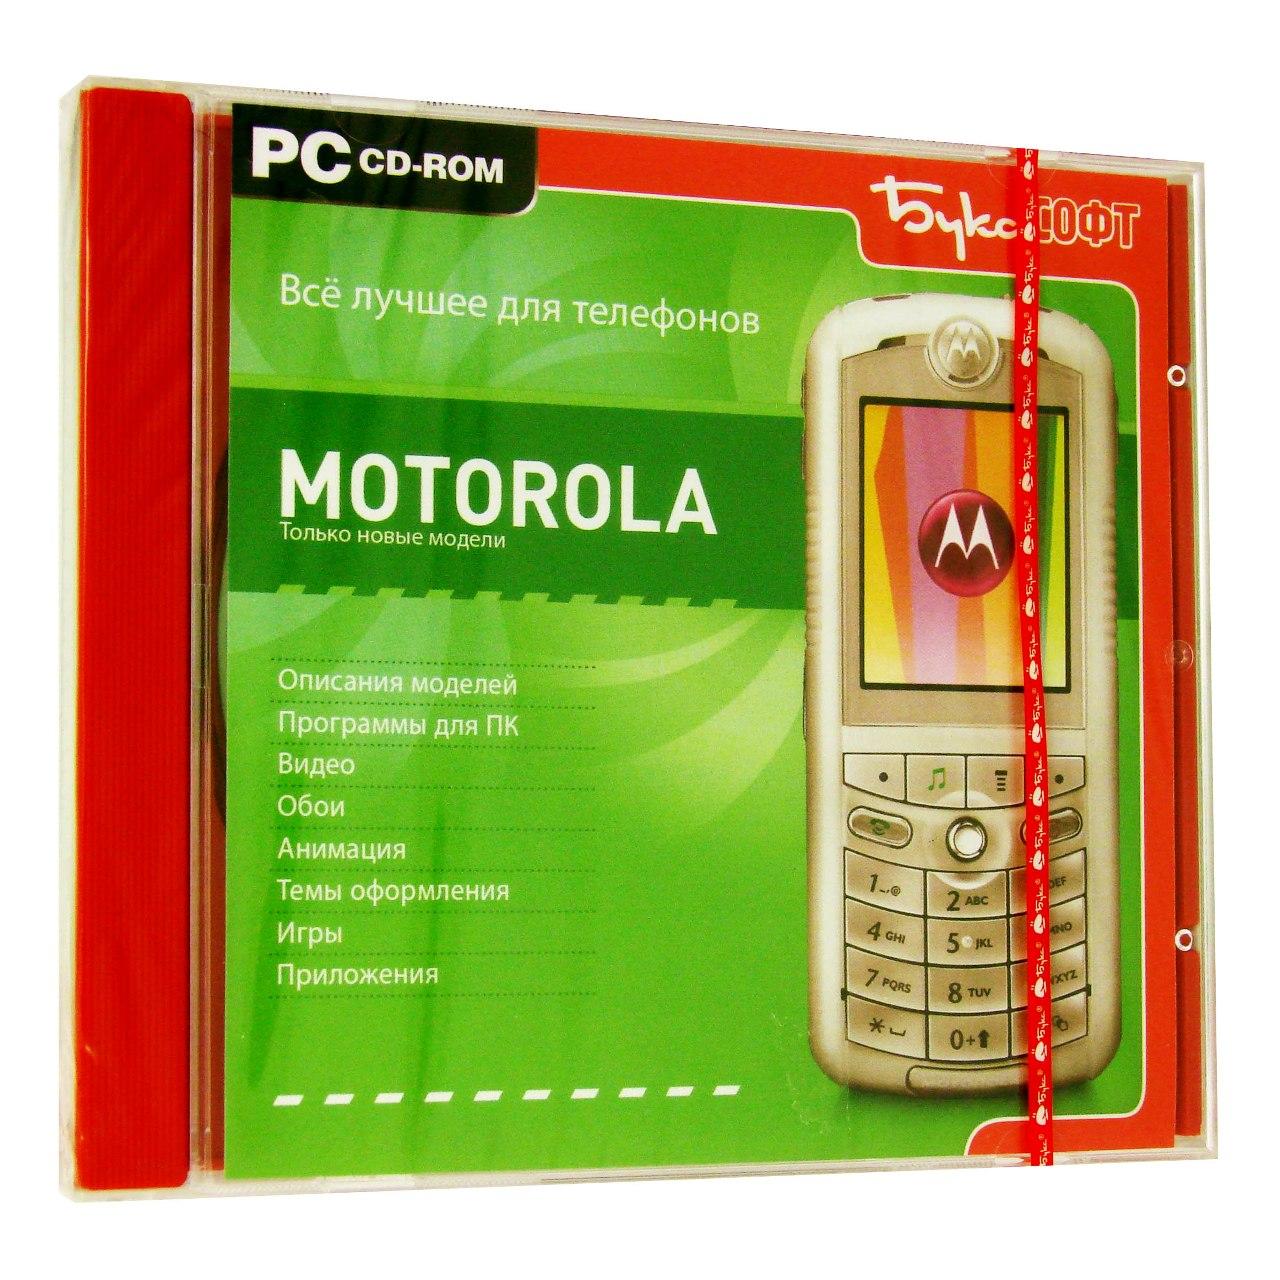  -     Motorola (PC),  "", 1CD